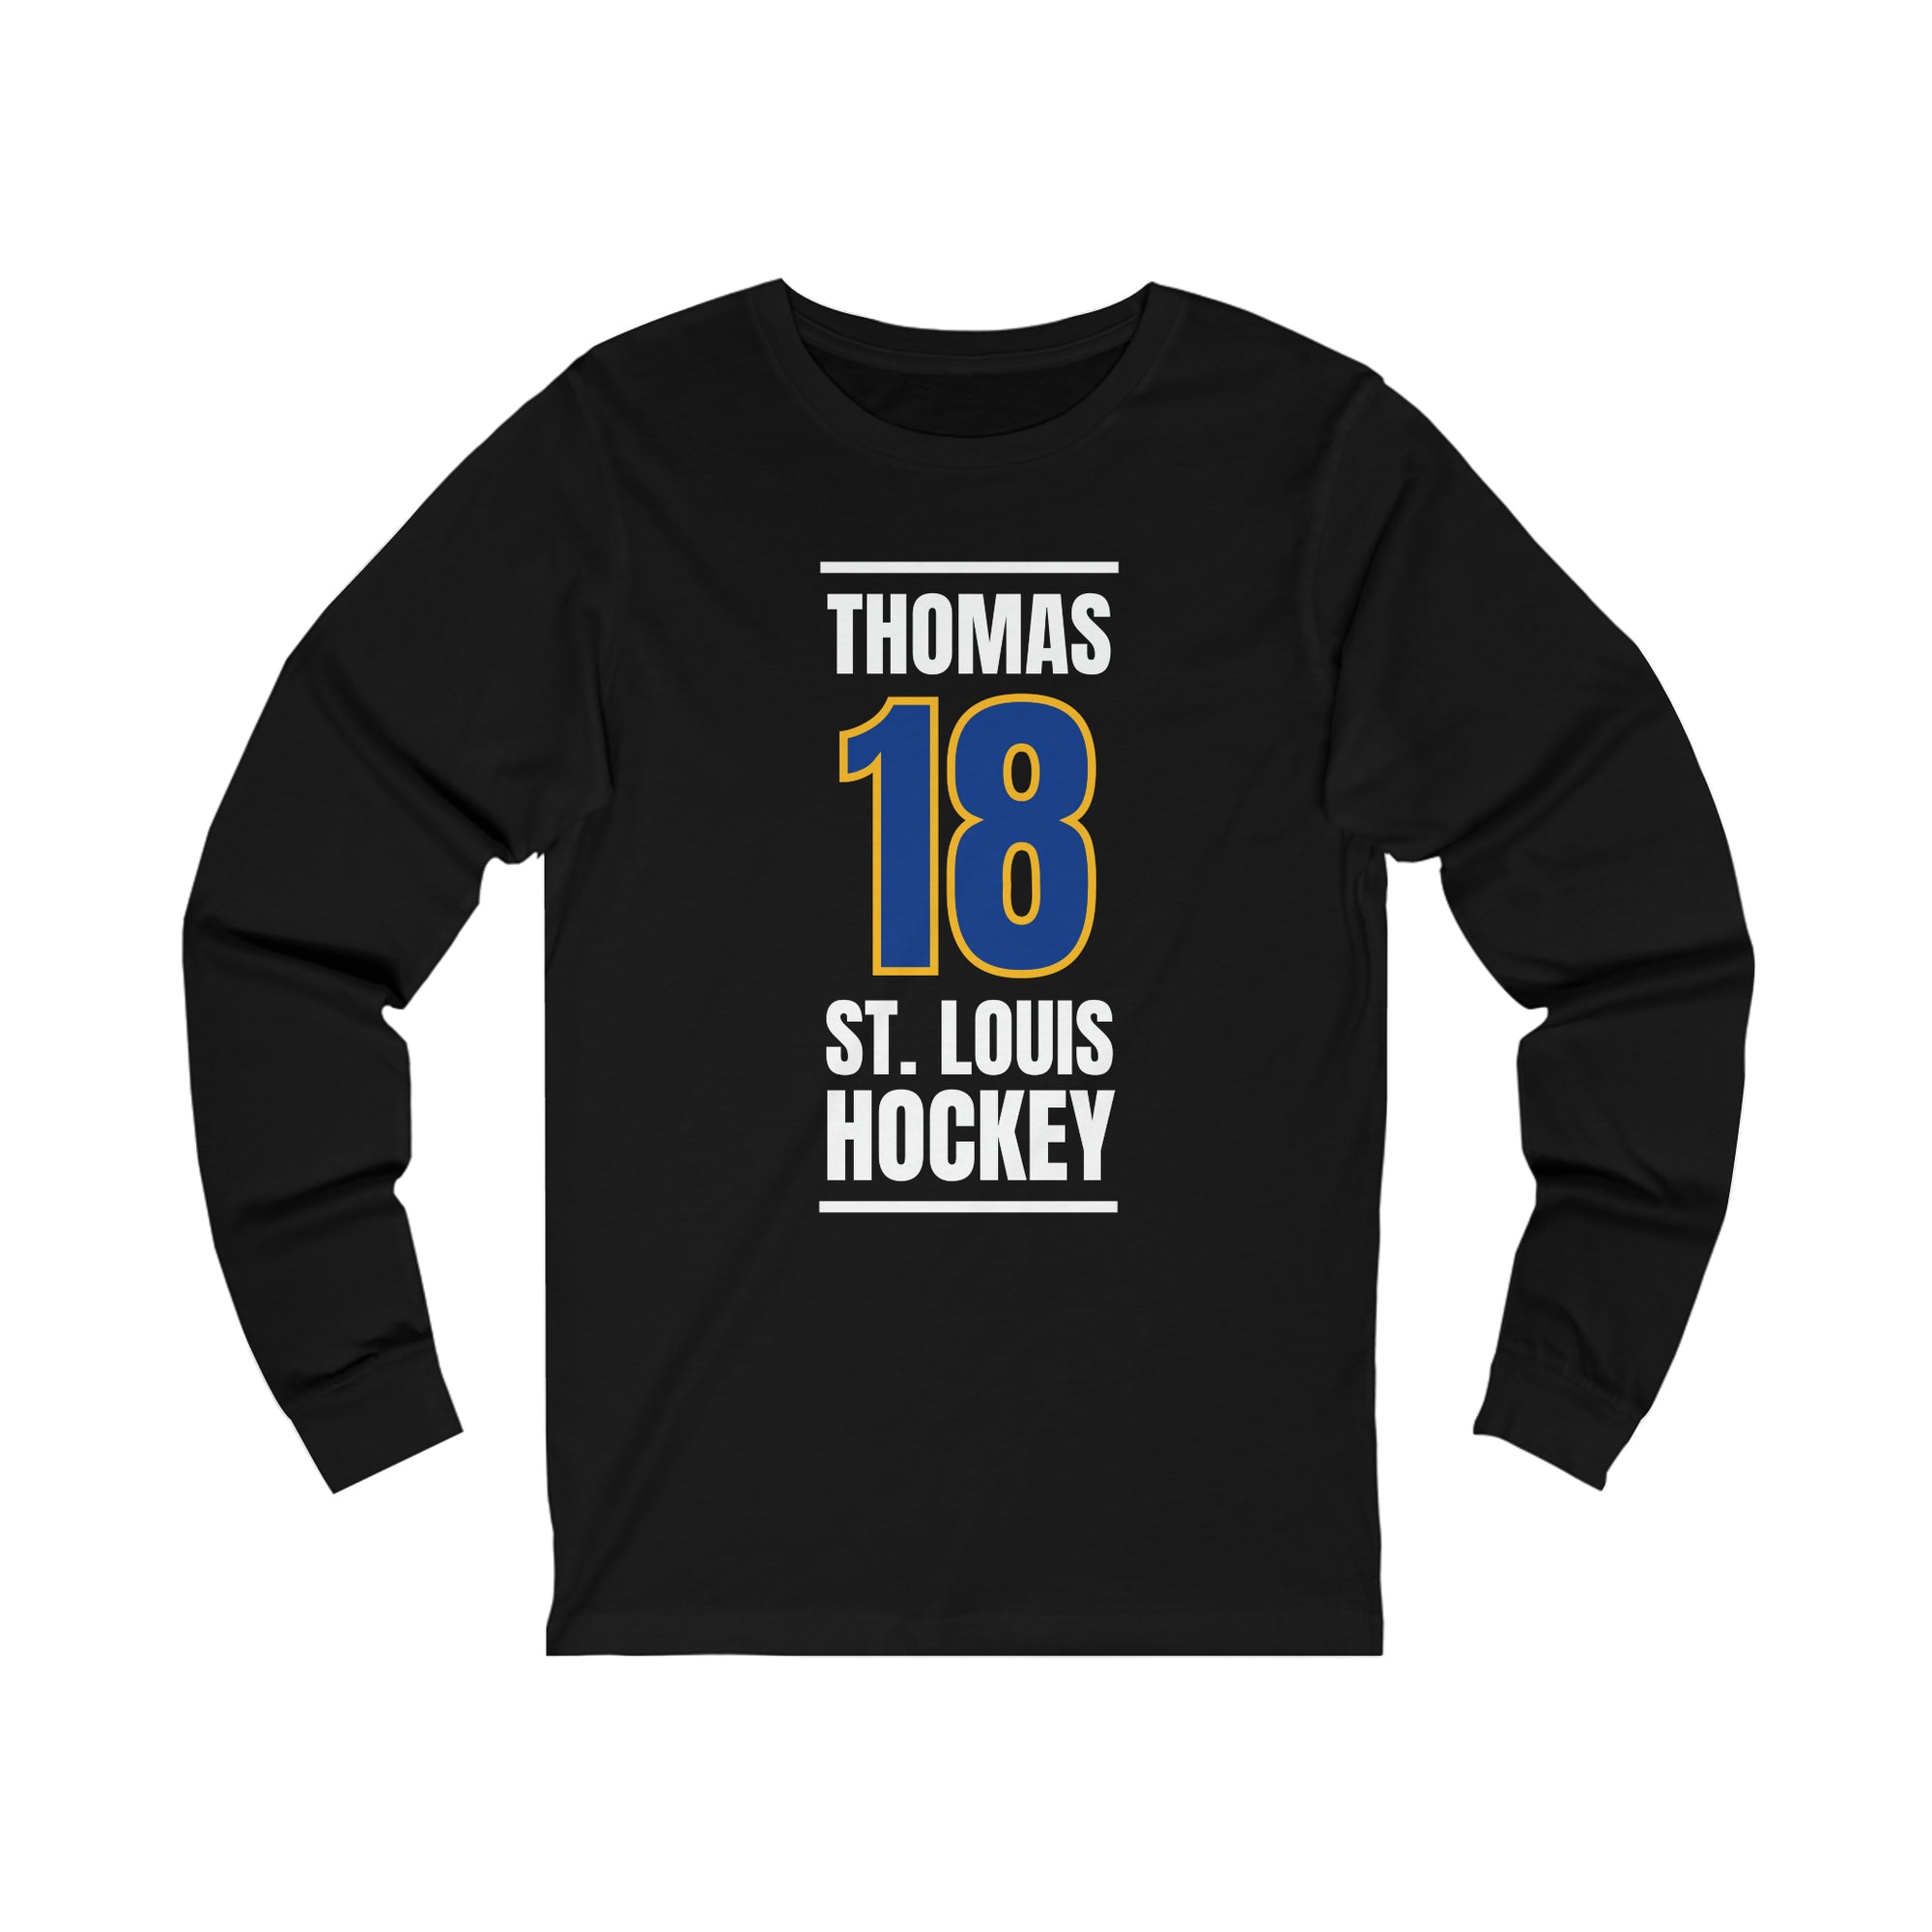 Thomas 18 St. Louis Hockey Blue Vertical Design Unisex Jersey Long Sleeve Shirt